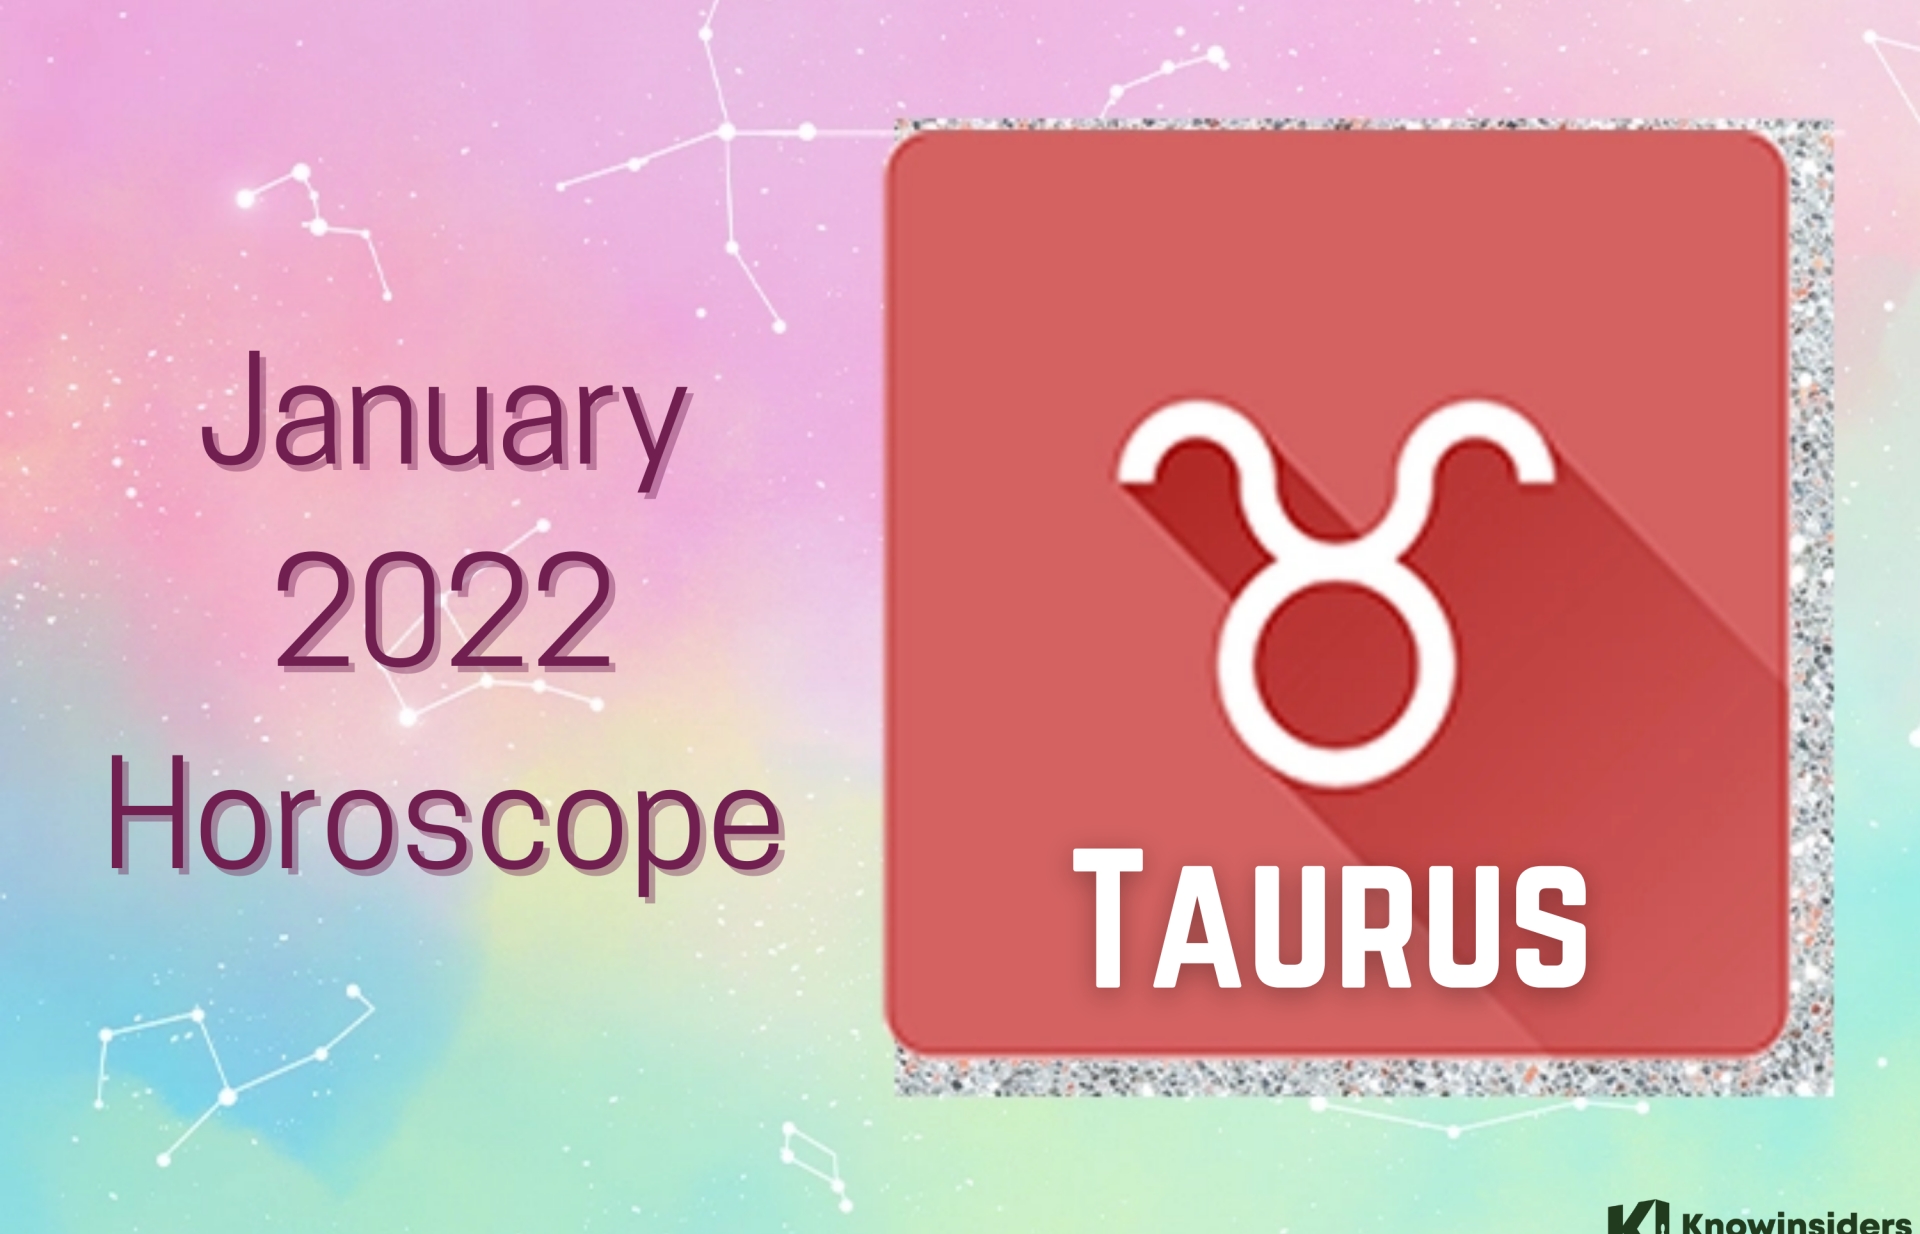 taurus january 2022 horoscope prediction for love career money and health